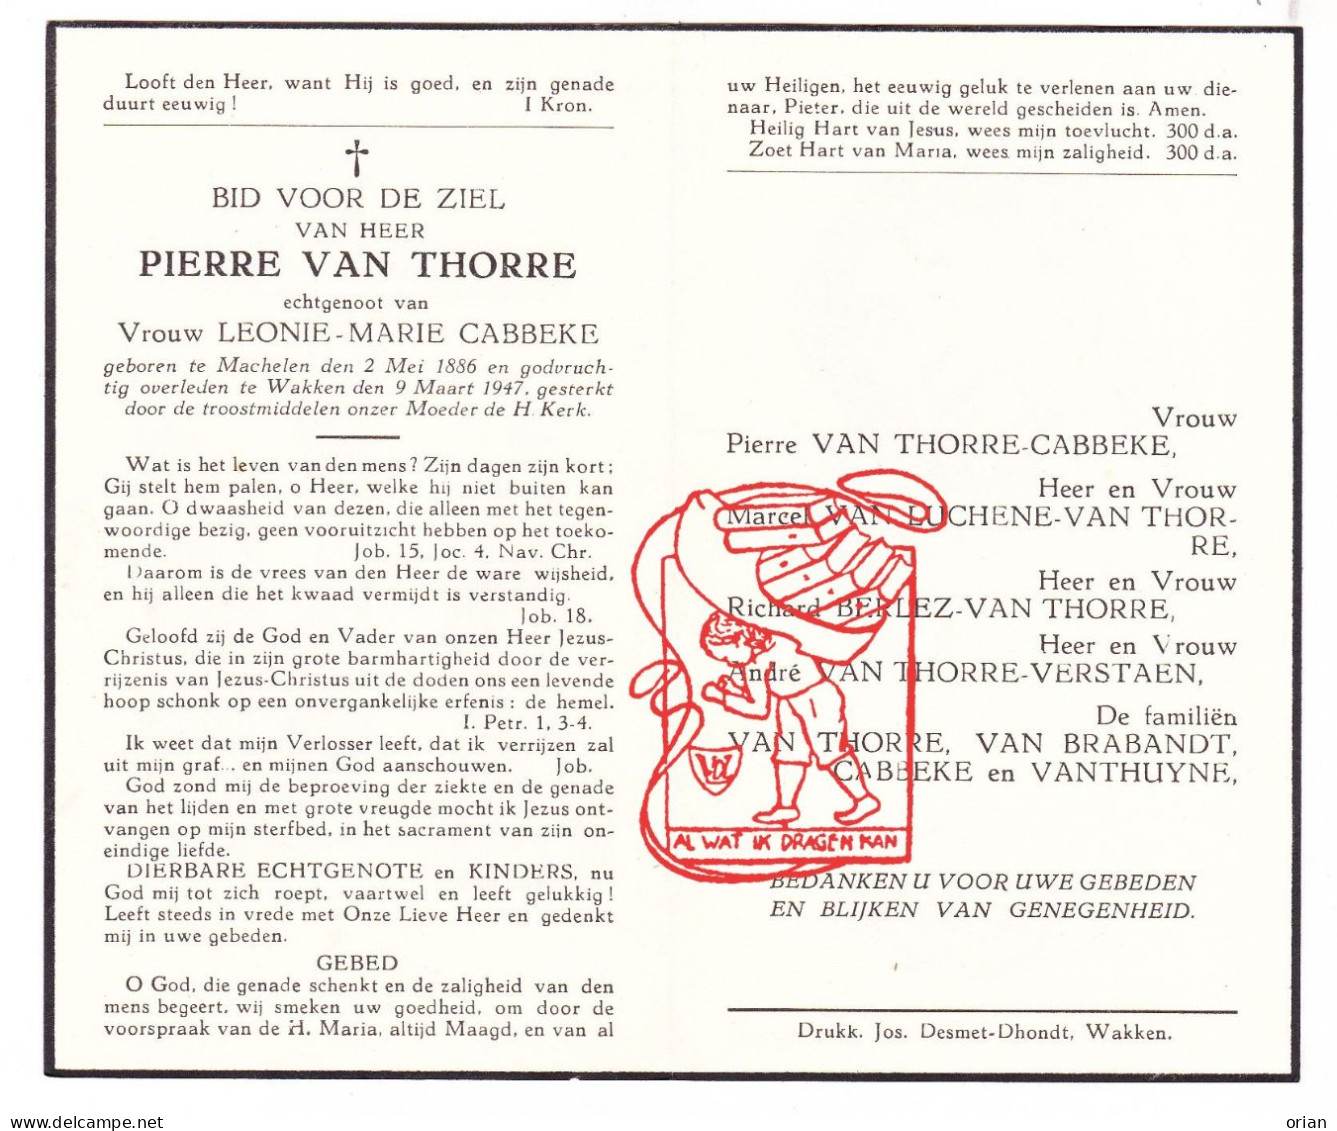 DP Pierre Van Thorre ° Machelen Zulte 1886 † Wakken Dentergem 1947 Cabbeke Van Luchene Berlez Verstaen Brabandt Thuyne - Devotion Images